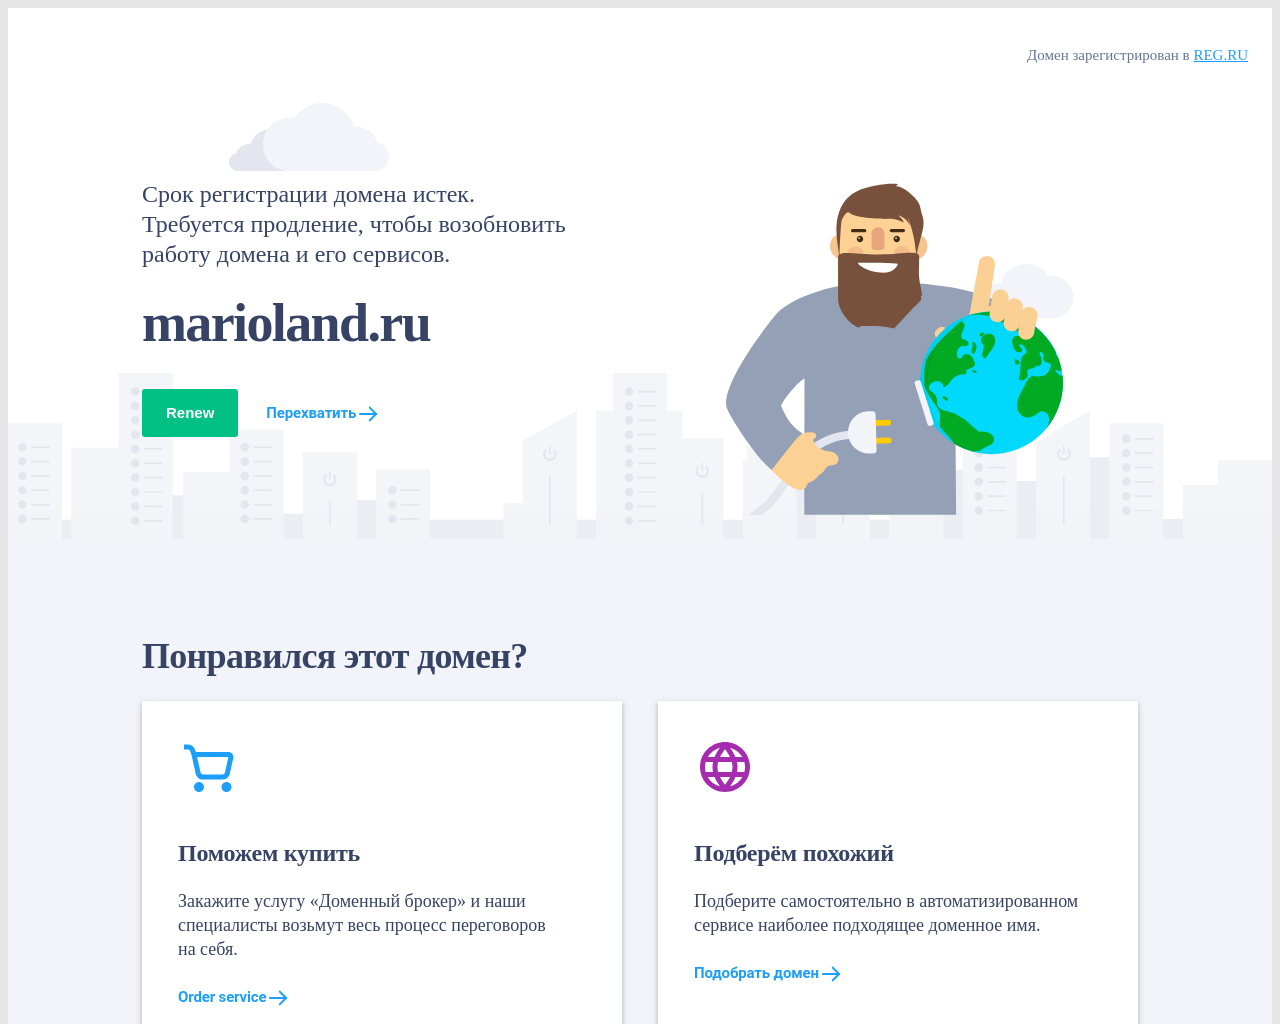 marioland.ru